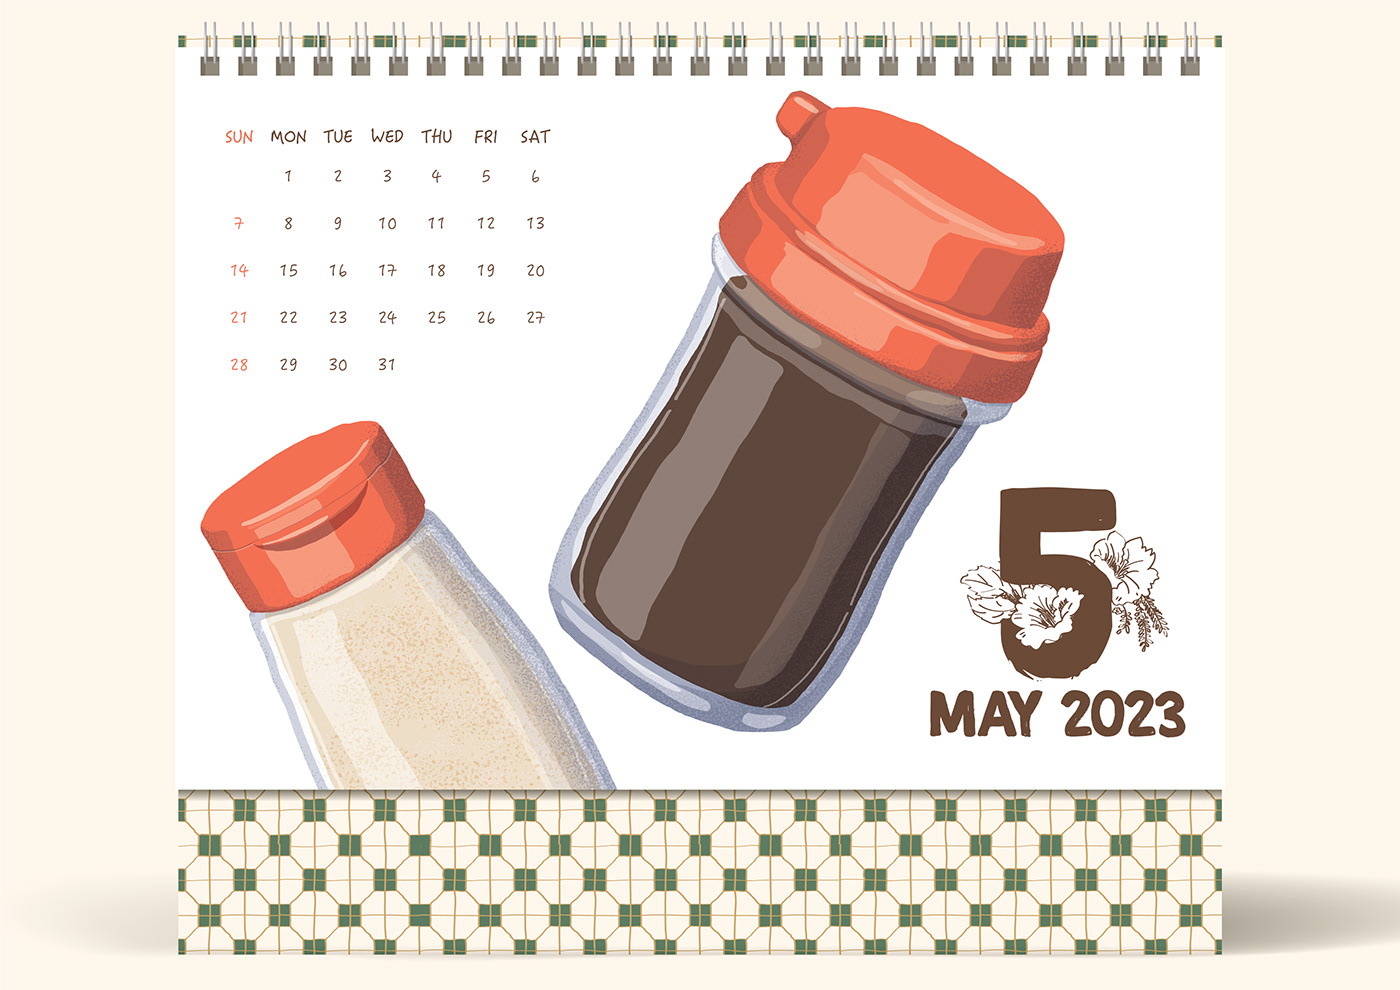 2023 calendar ais kacang calendar design kopi kopitiam malaysia Nanyang roti bakar singapore teh tarik